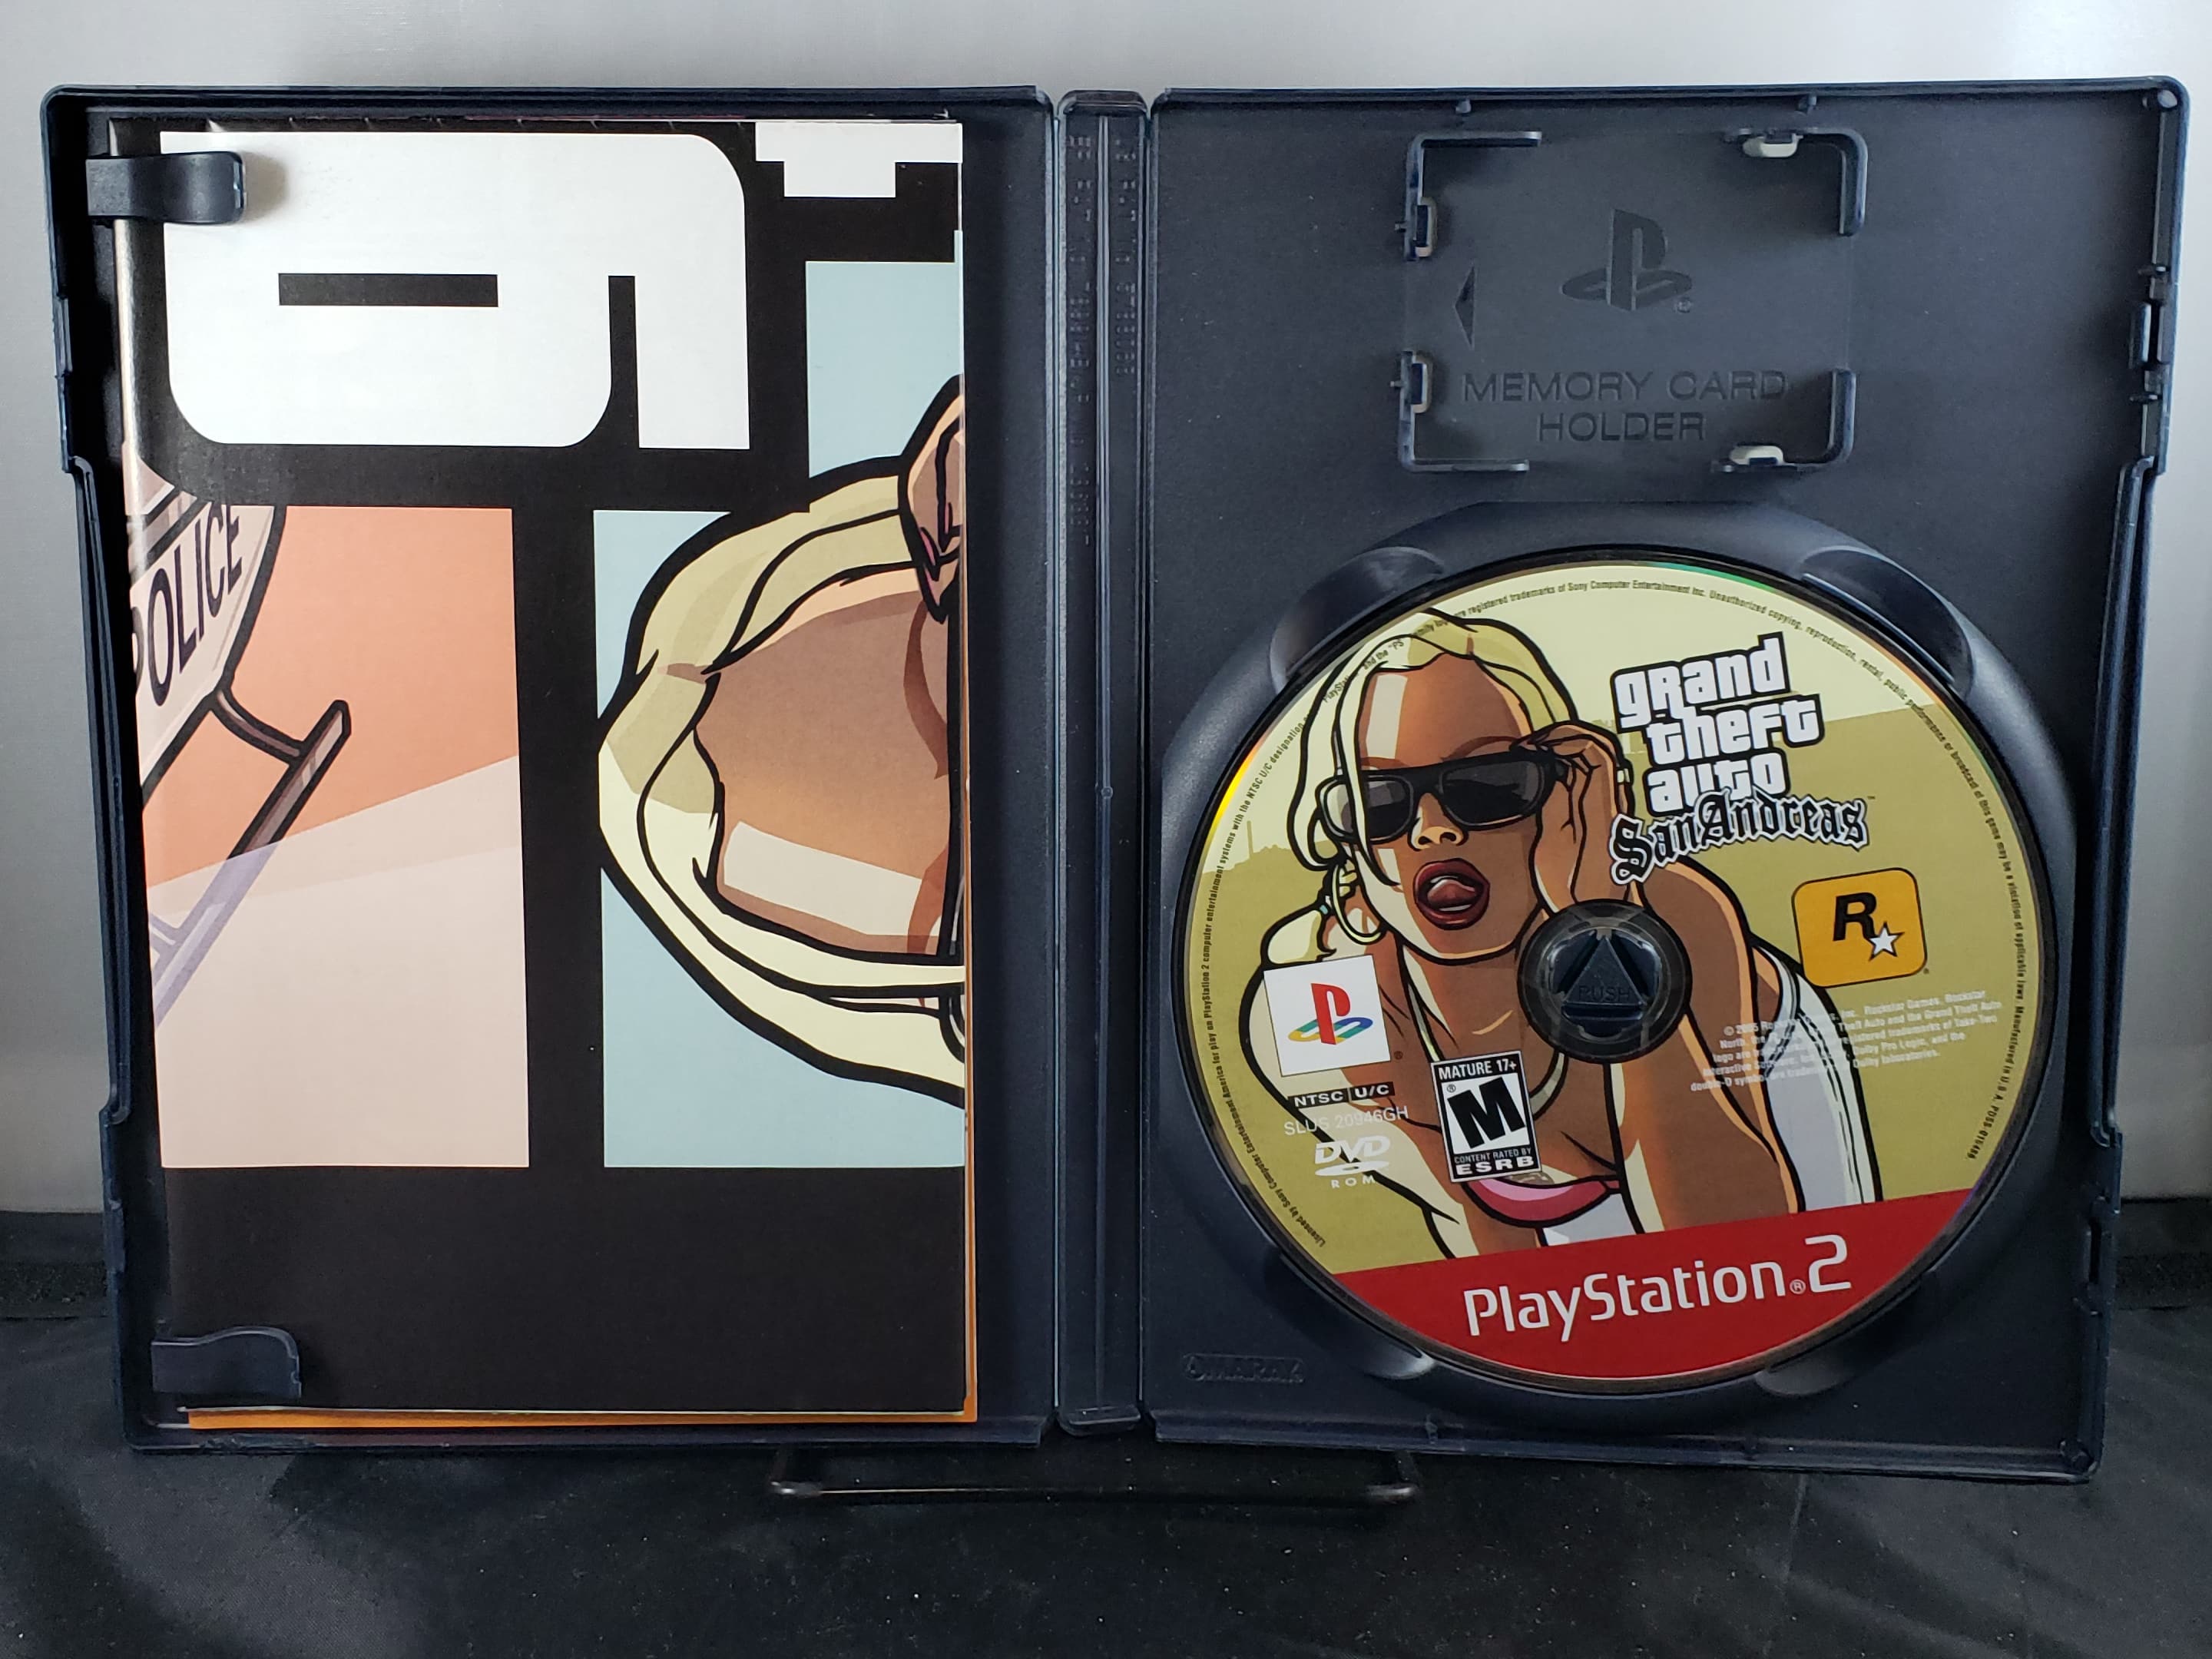 GTA: Grand Theft Auto: San Andreas (PS2) USED B/U Disk